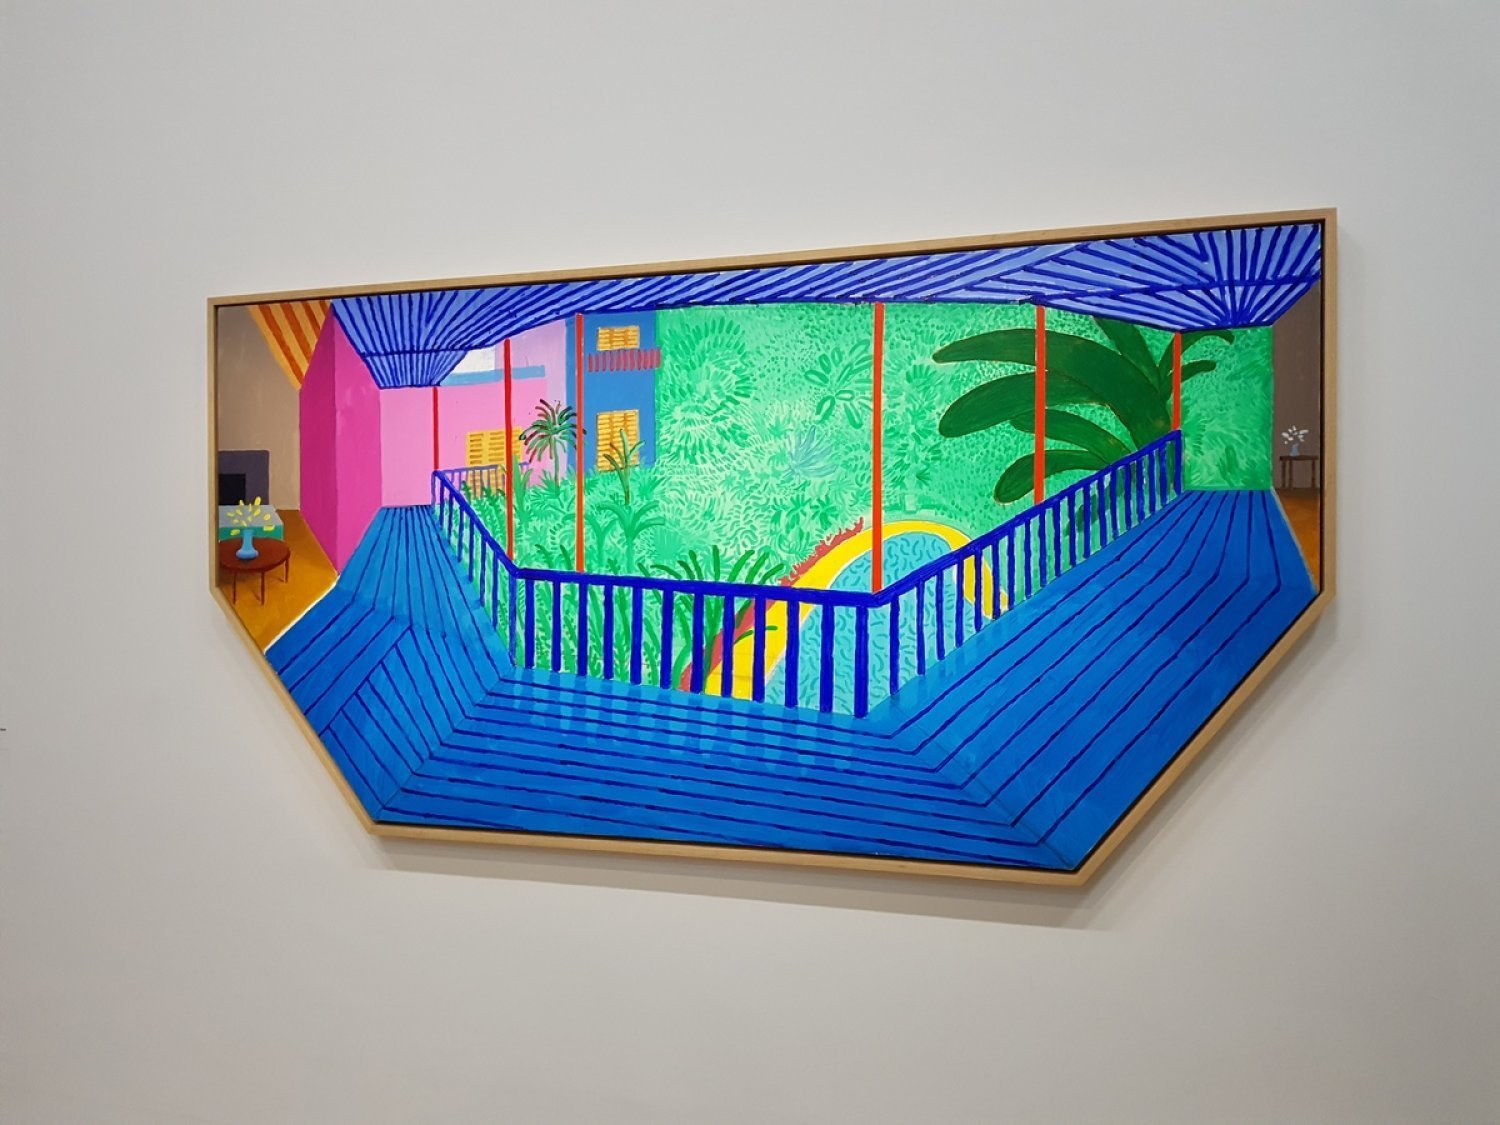 Rétrospective David Hockney au Centre Pompidou